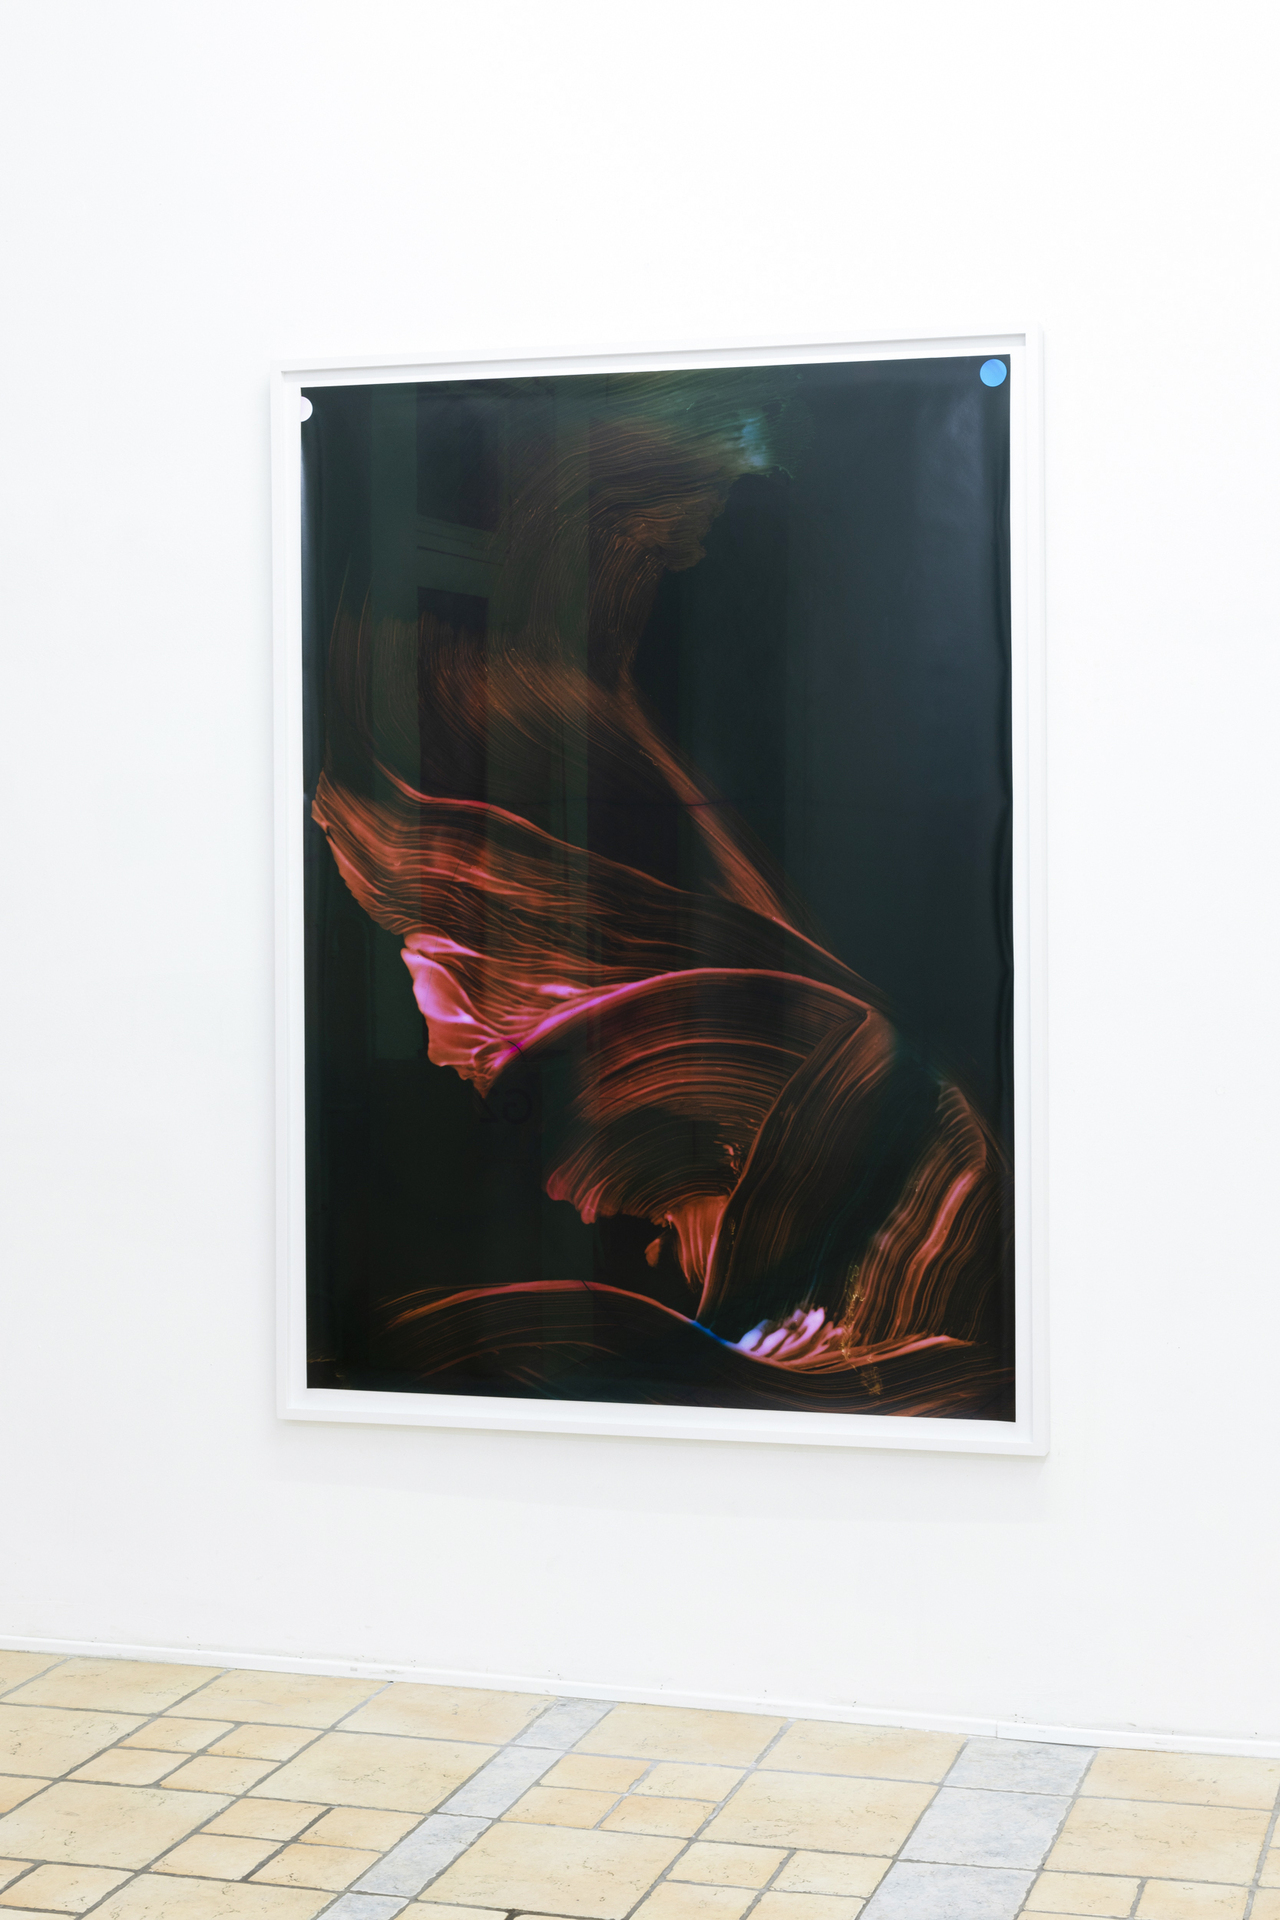 Marta Djourina, untitled, 2022, direct exposure on analog photo paper, self-made film negative, framed, 120 x 180